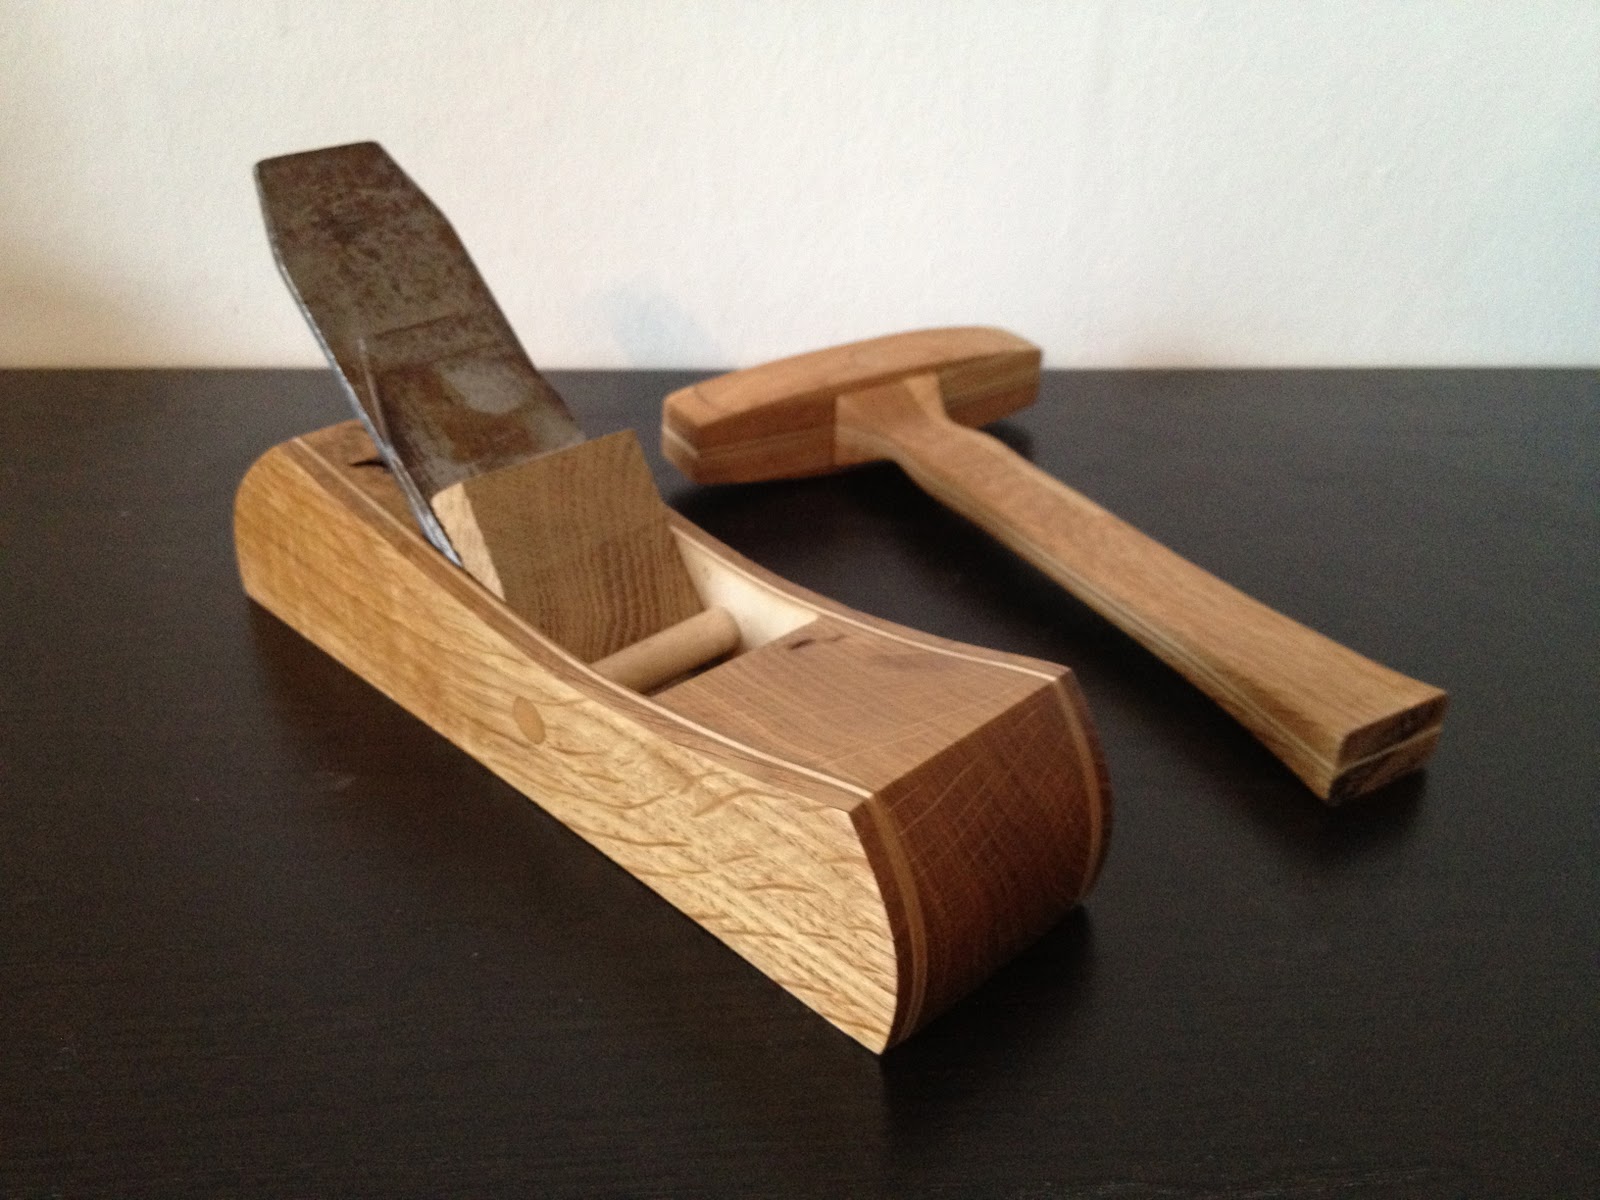 The Sawdust Surfer: Wooden Hand plane